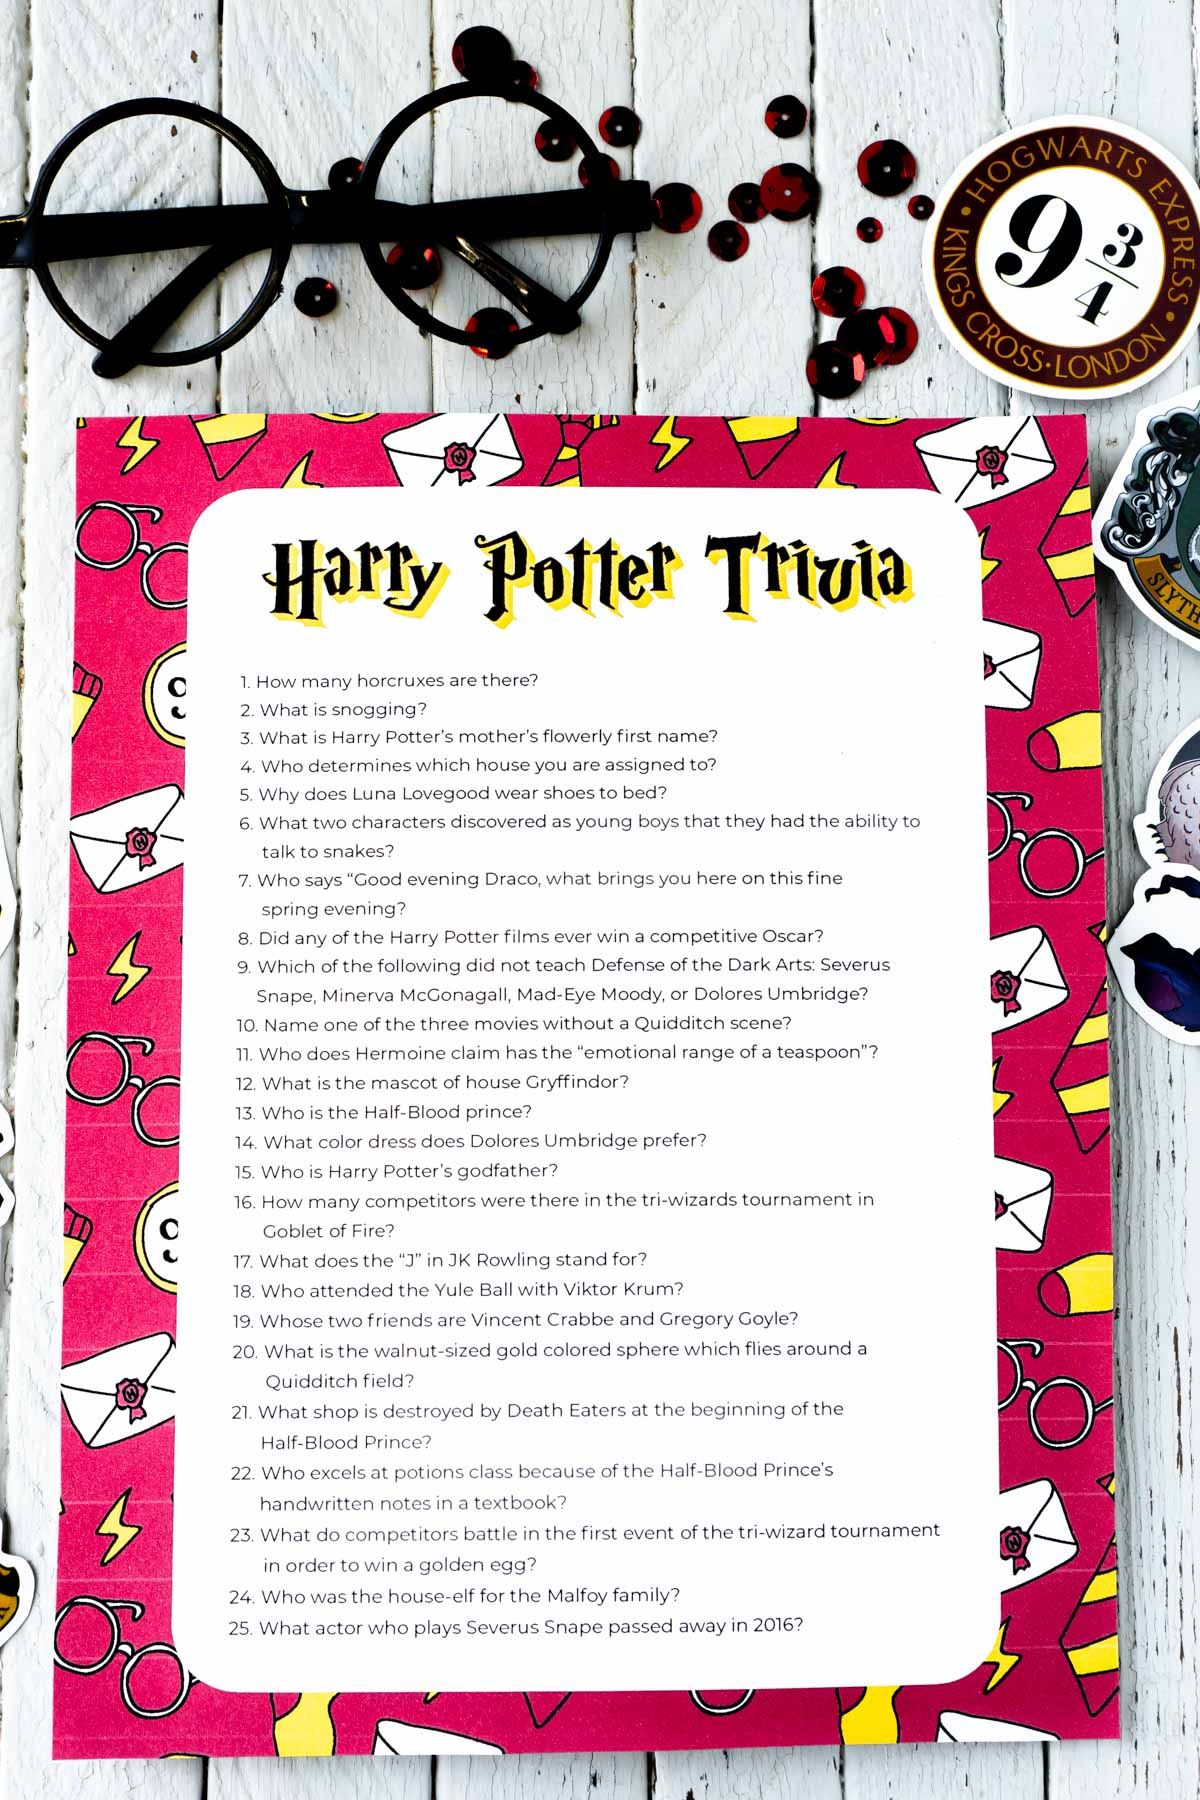 Preguntas de trivia de Harry Potter con un par de lentes de Harry Potter de fondo